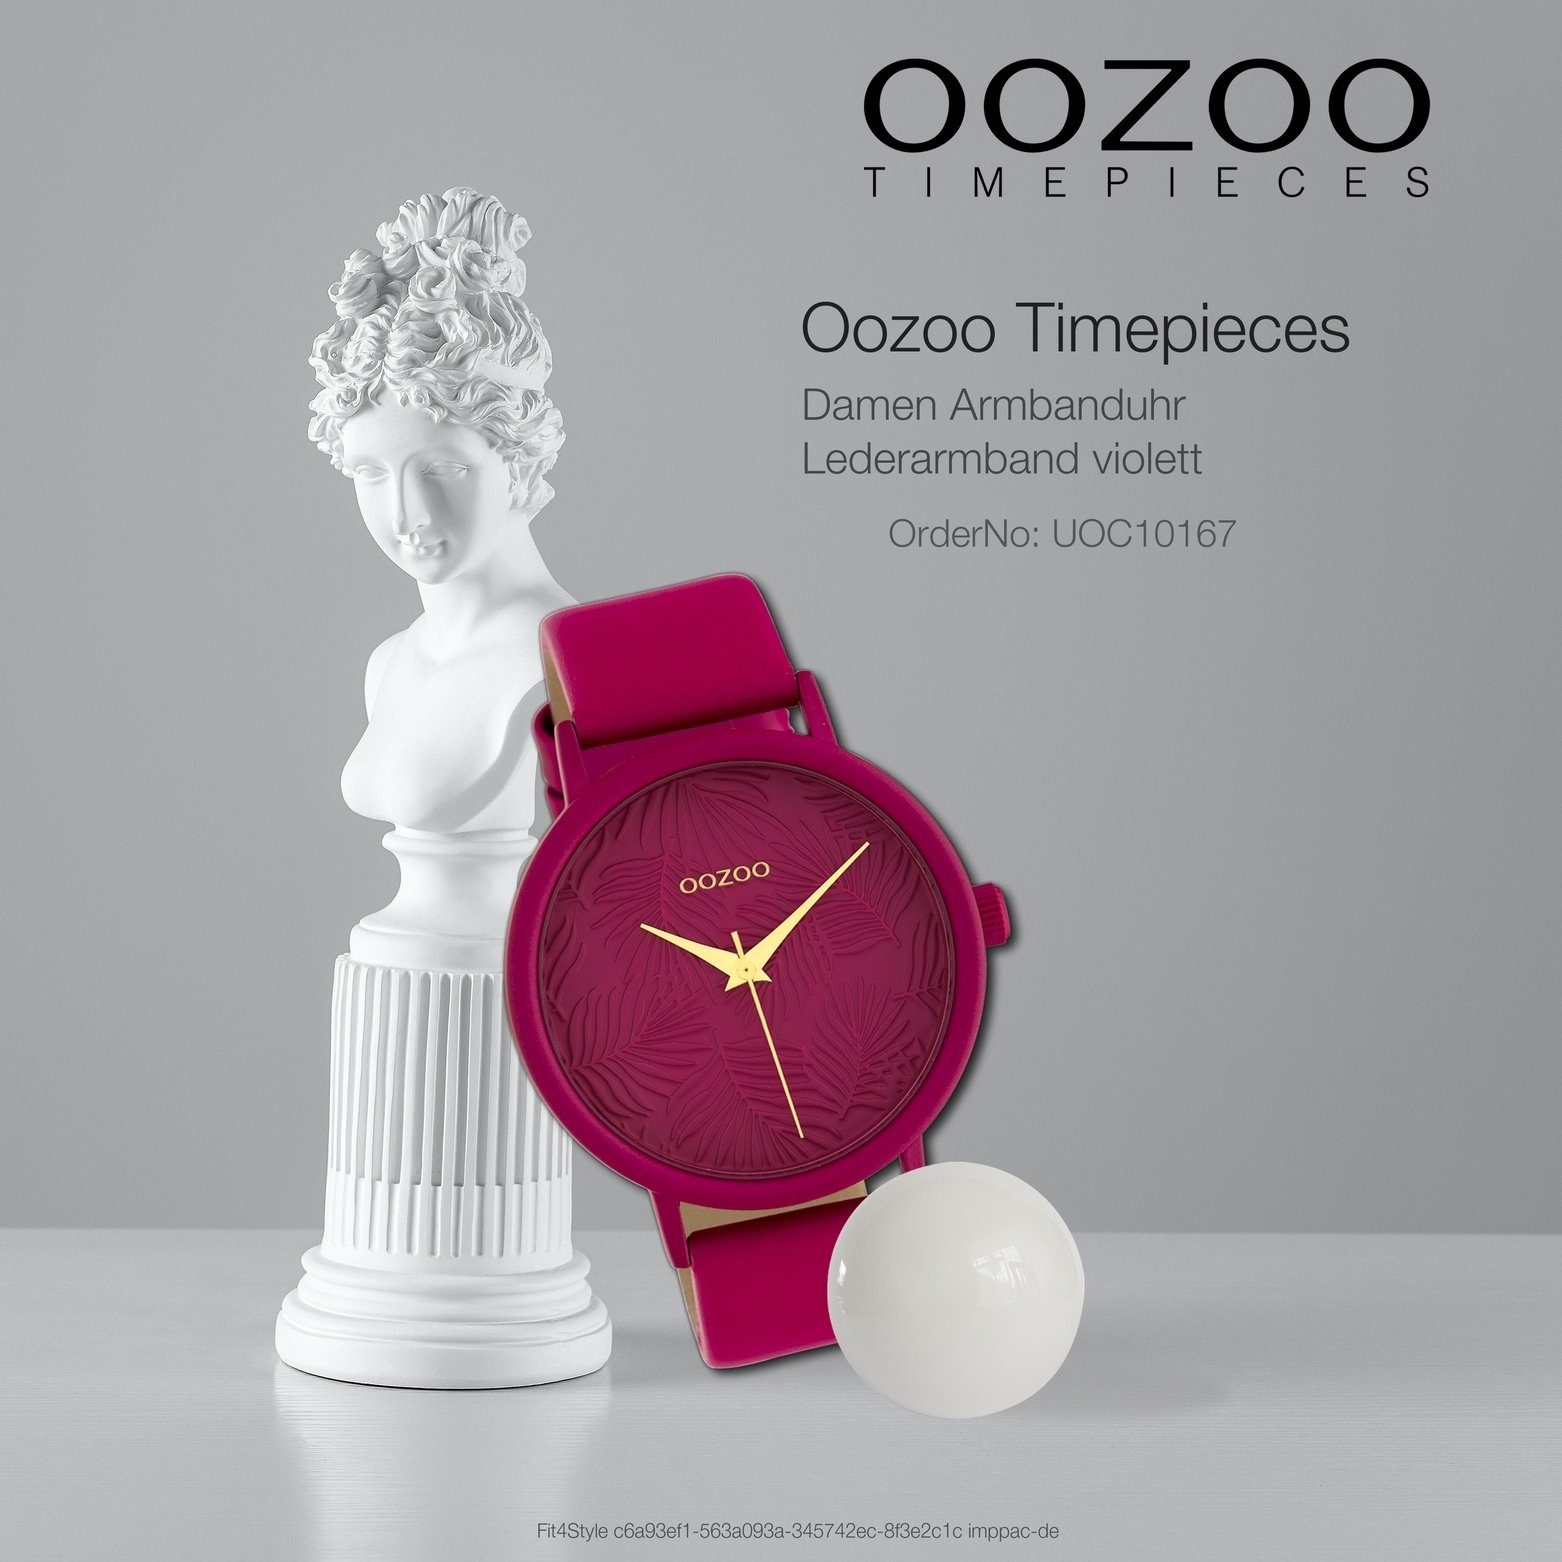 42mm) Damen Damenuhr (ca. Quarzuhr Fashion-Style Lederarmband, Armbanduhr Oozoo rund, fuchsia, OOZOO groß